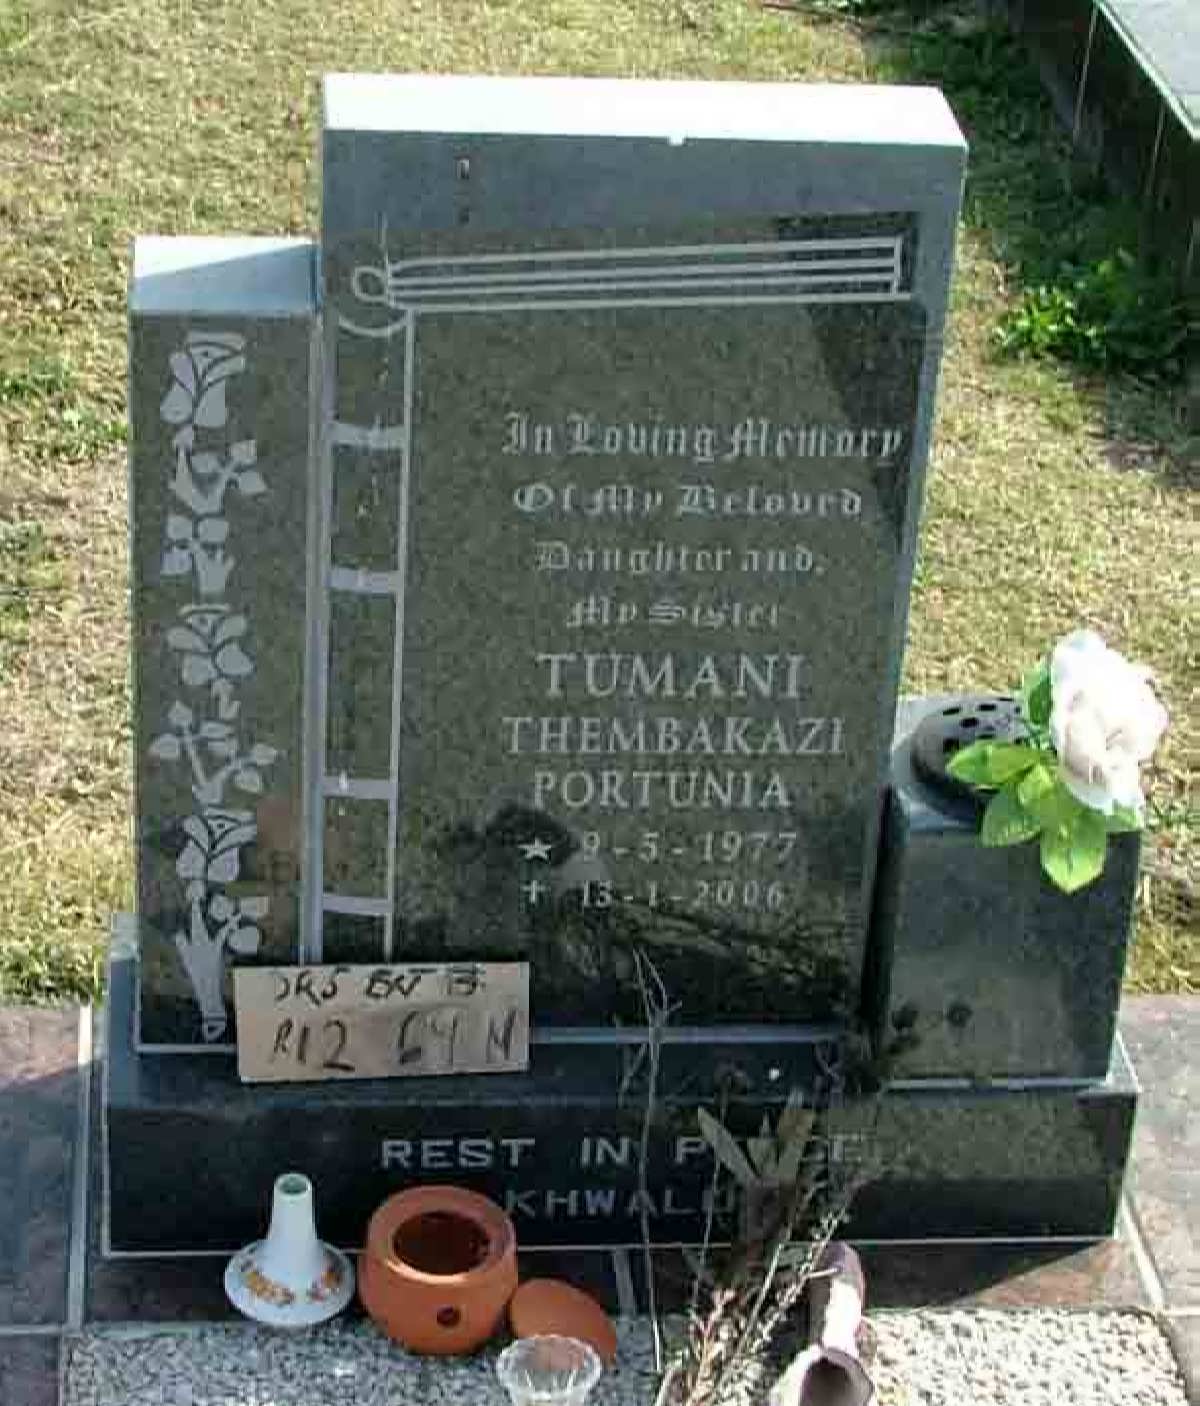 TUMANI Thembakazi Portunia 1977-2006